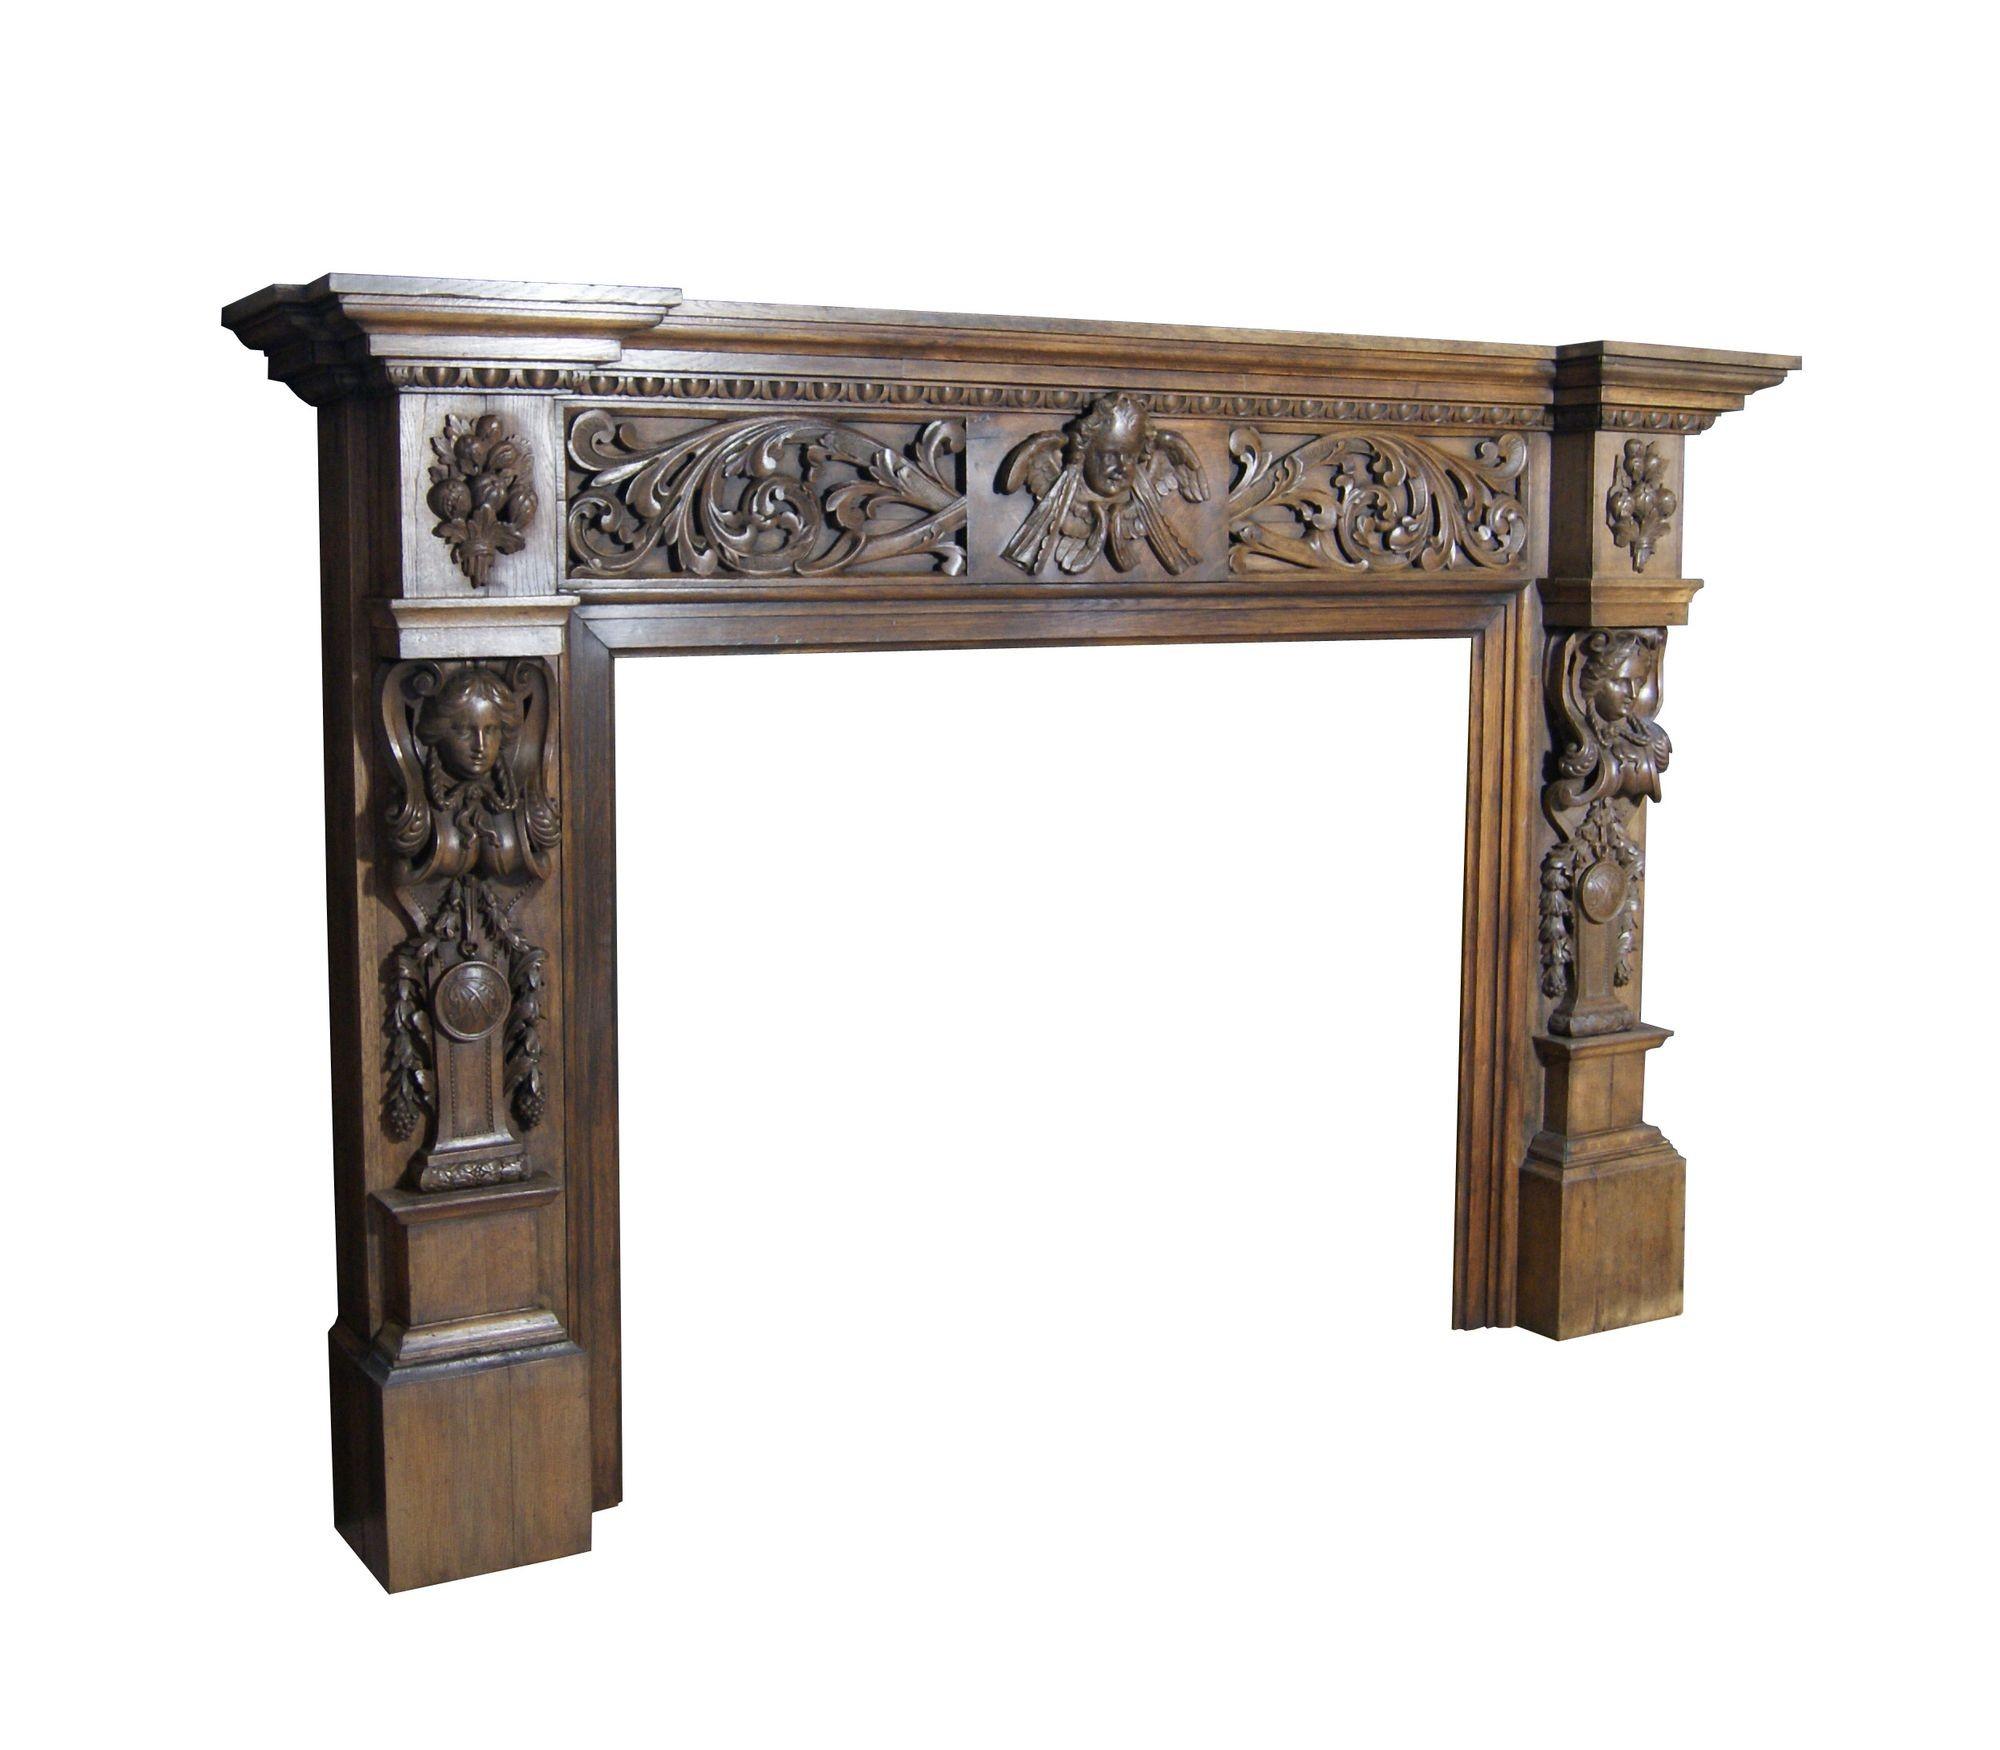 Jacobean A Large and Imposing English Antique Oak Fireplace Mantel